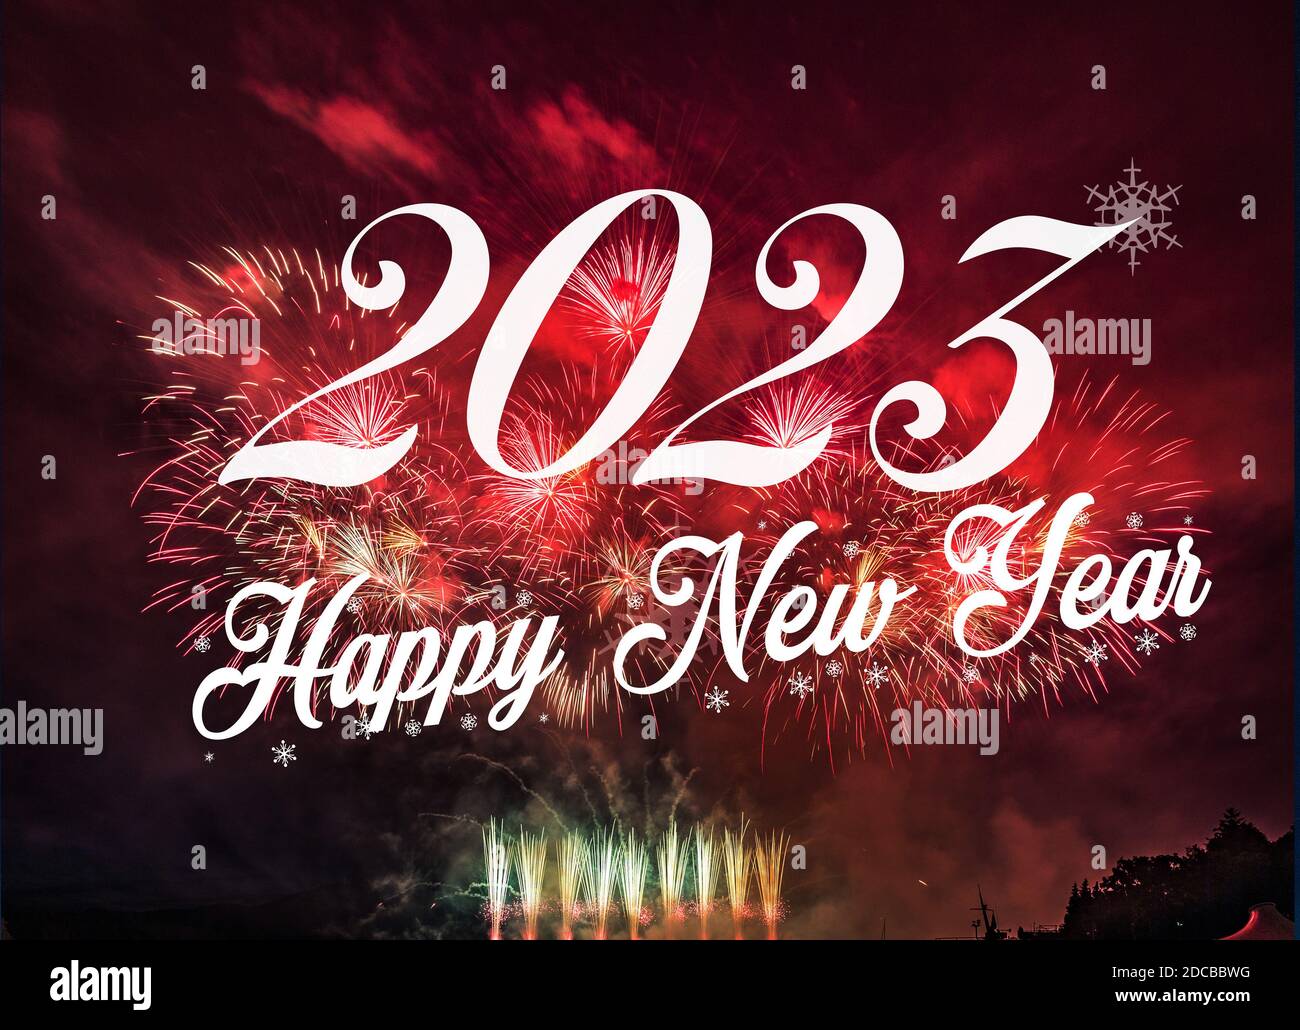 Happy new year 2023 with fireworks background. Celebration New Year 2023  Stock Photo - Alamy